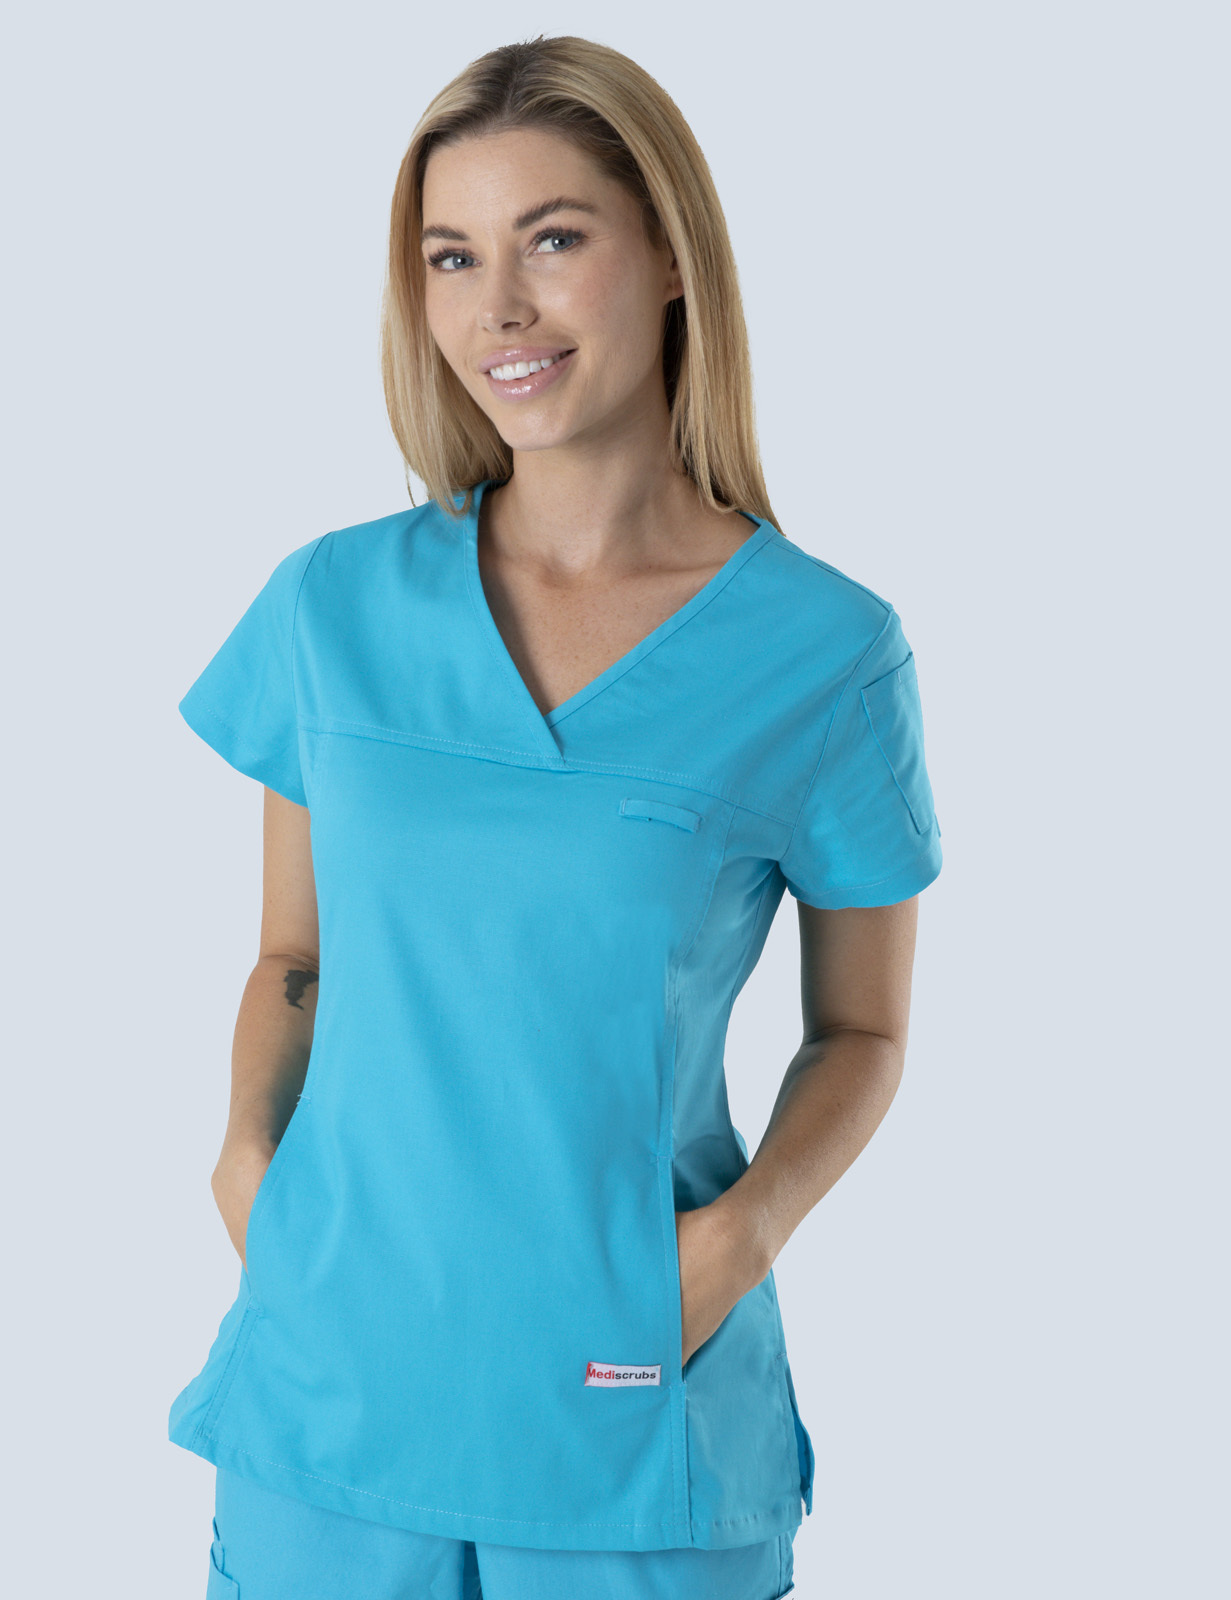 Queensland Children's Hospital Emergency Department Registered  Nurse  Uniform Top Bundle  (Women's Fit Top in Aqua incl Logos)